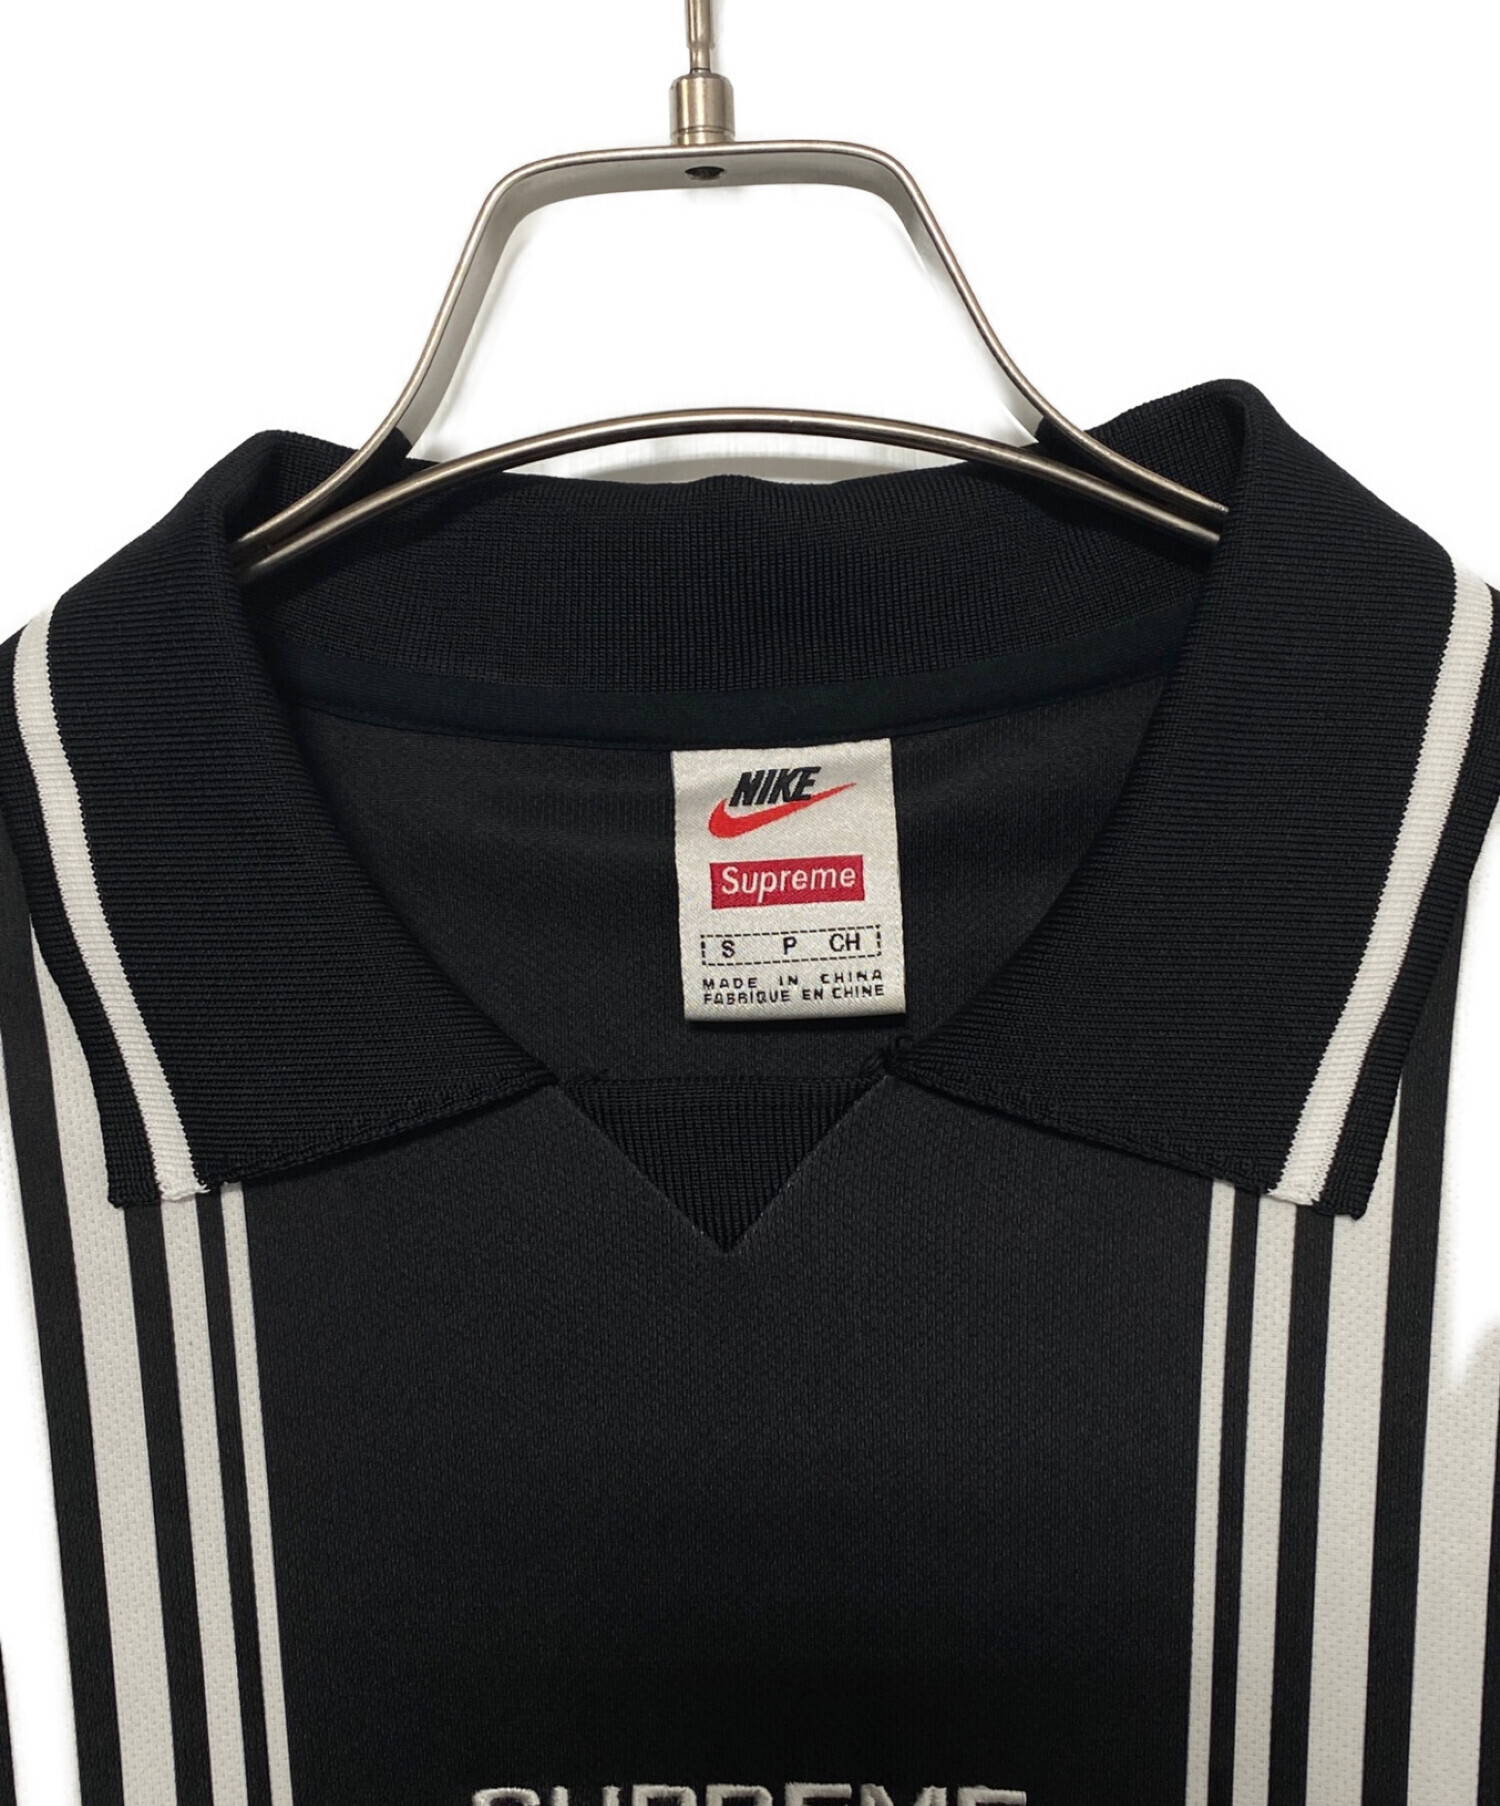 SUPREME×NIKE (シュプリーム×ナイキ) Jewel Stripe Soccer Jersey ブラック サイズ:S